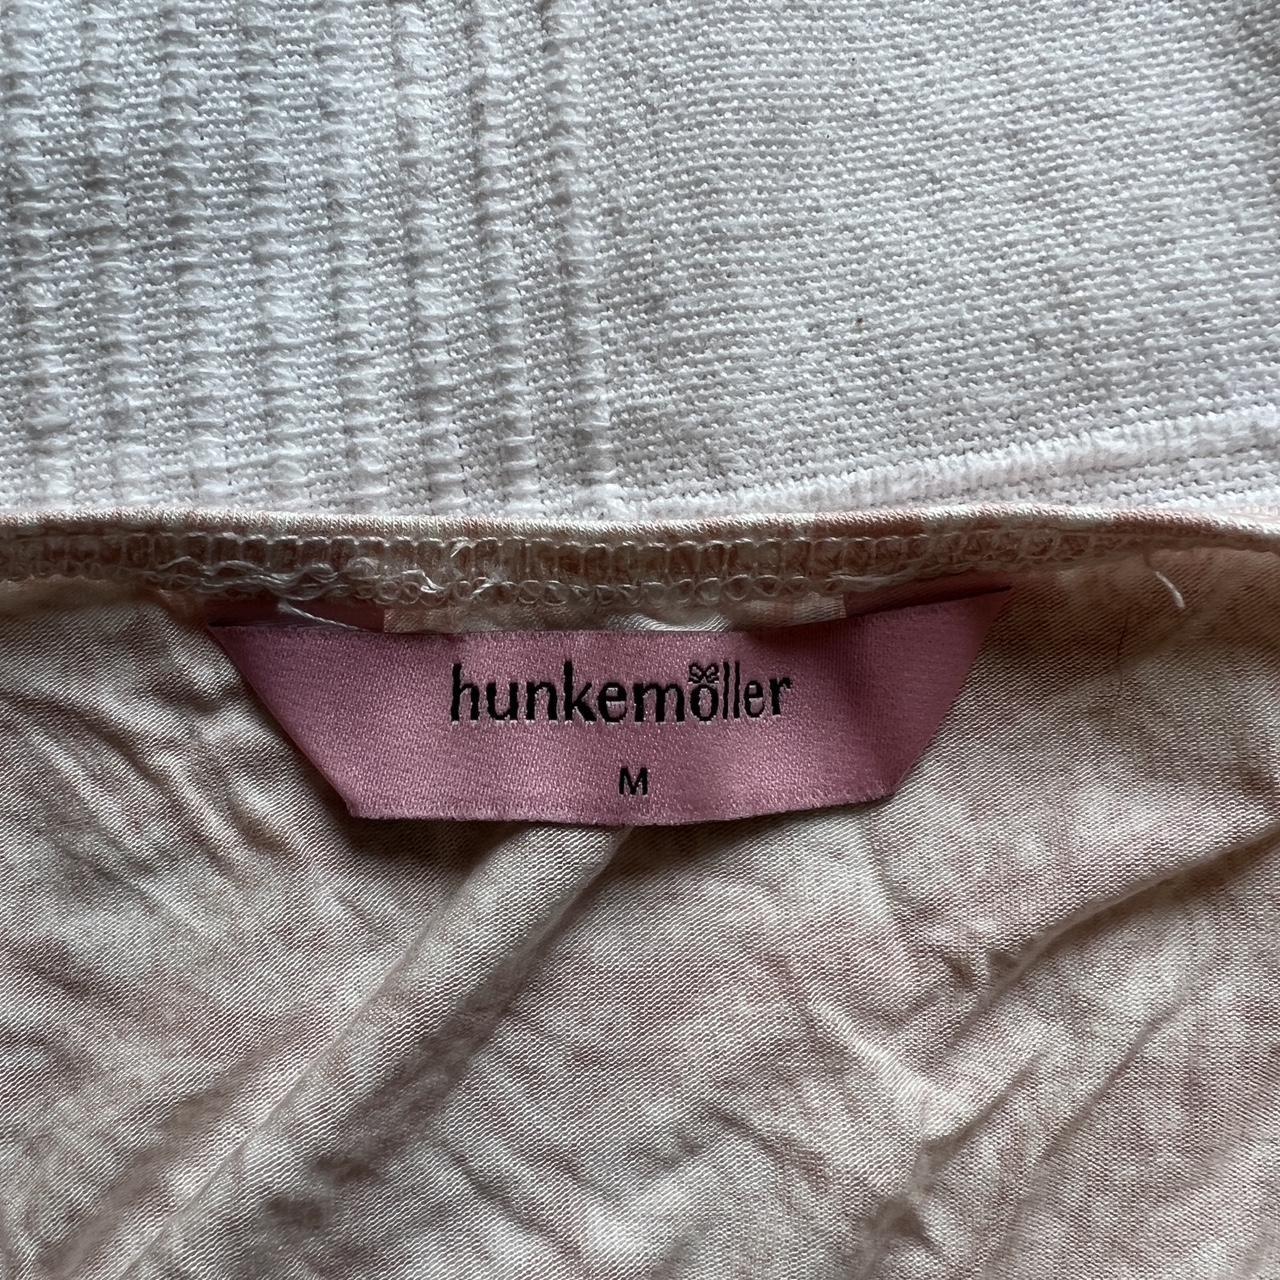 Hunkemöller Women's Pajamas (5)